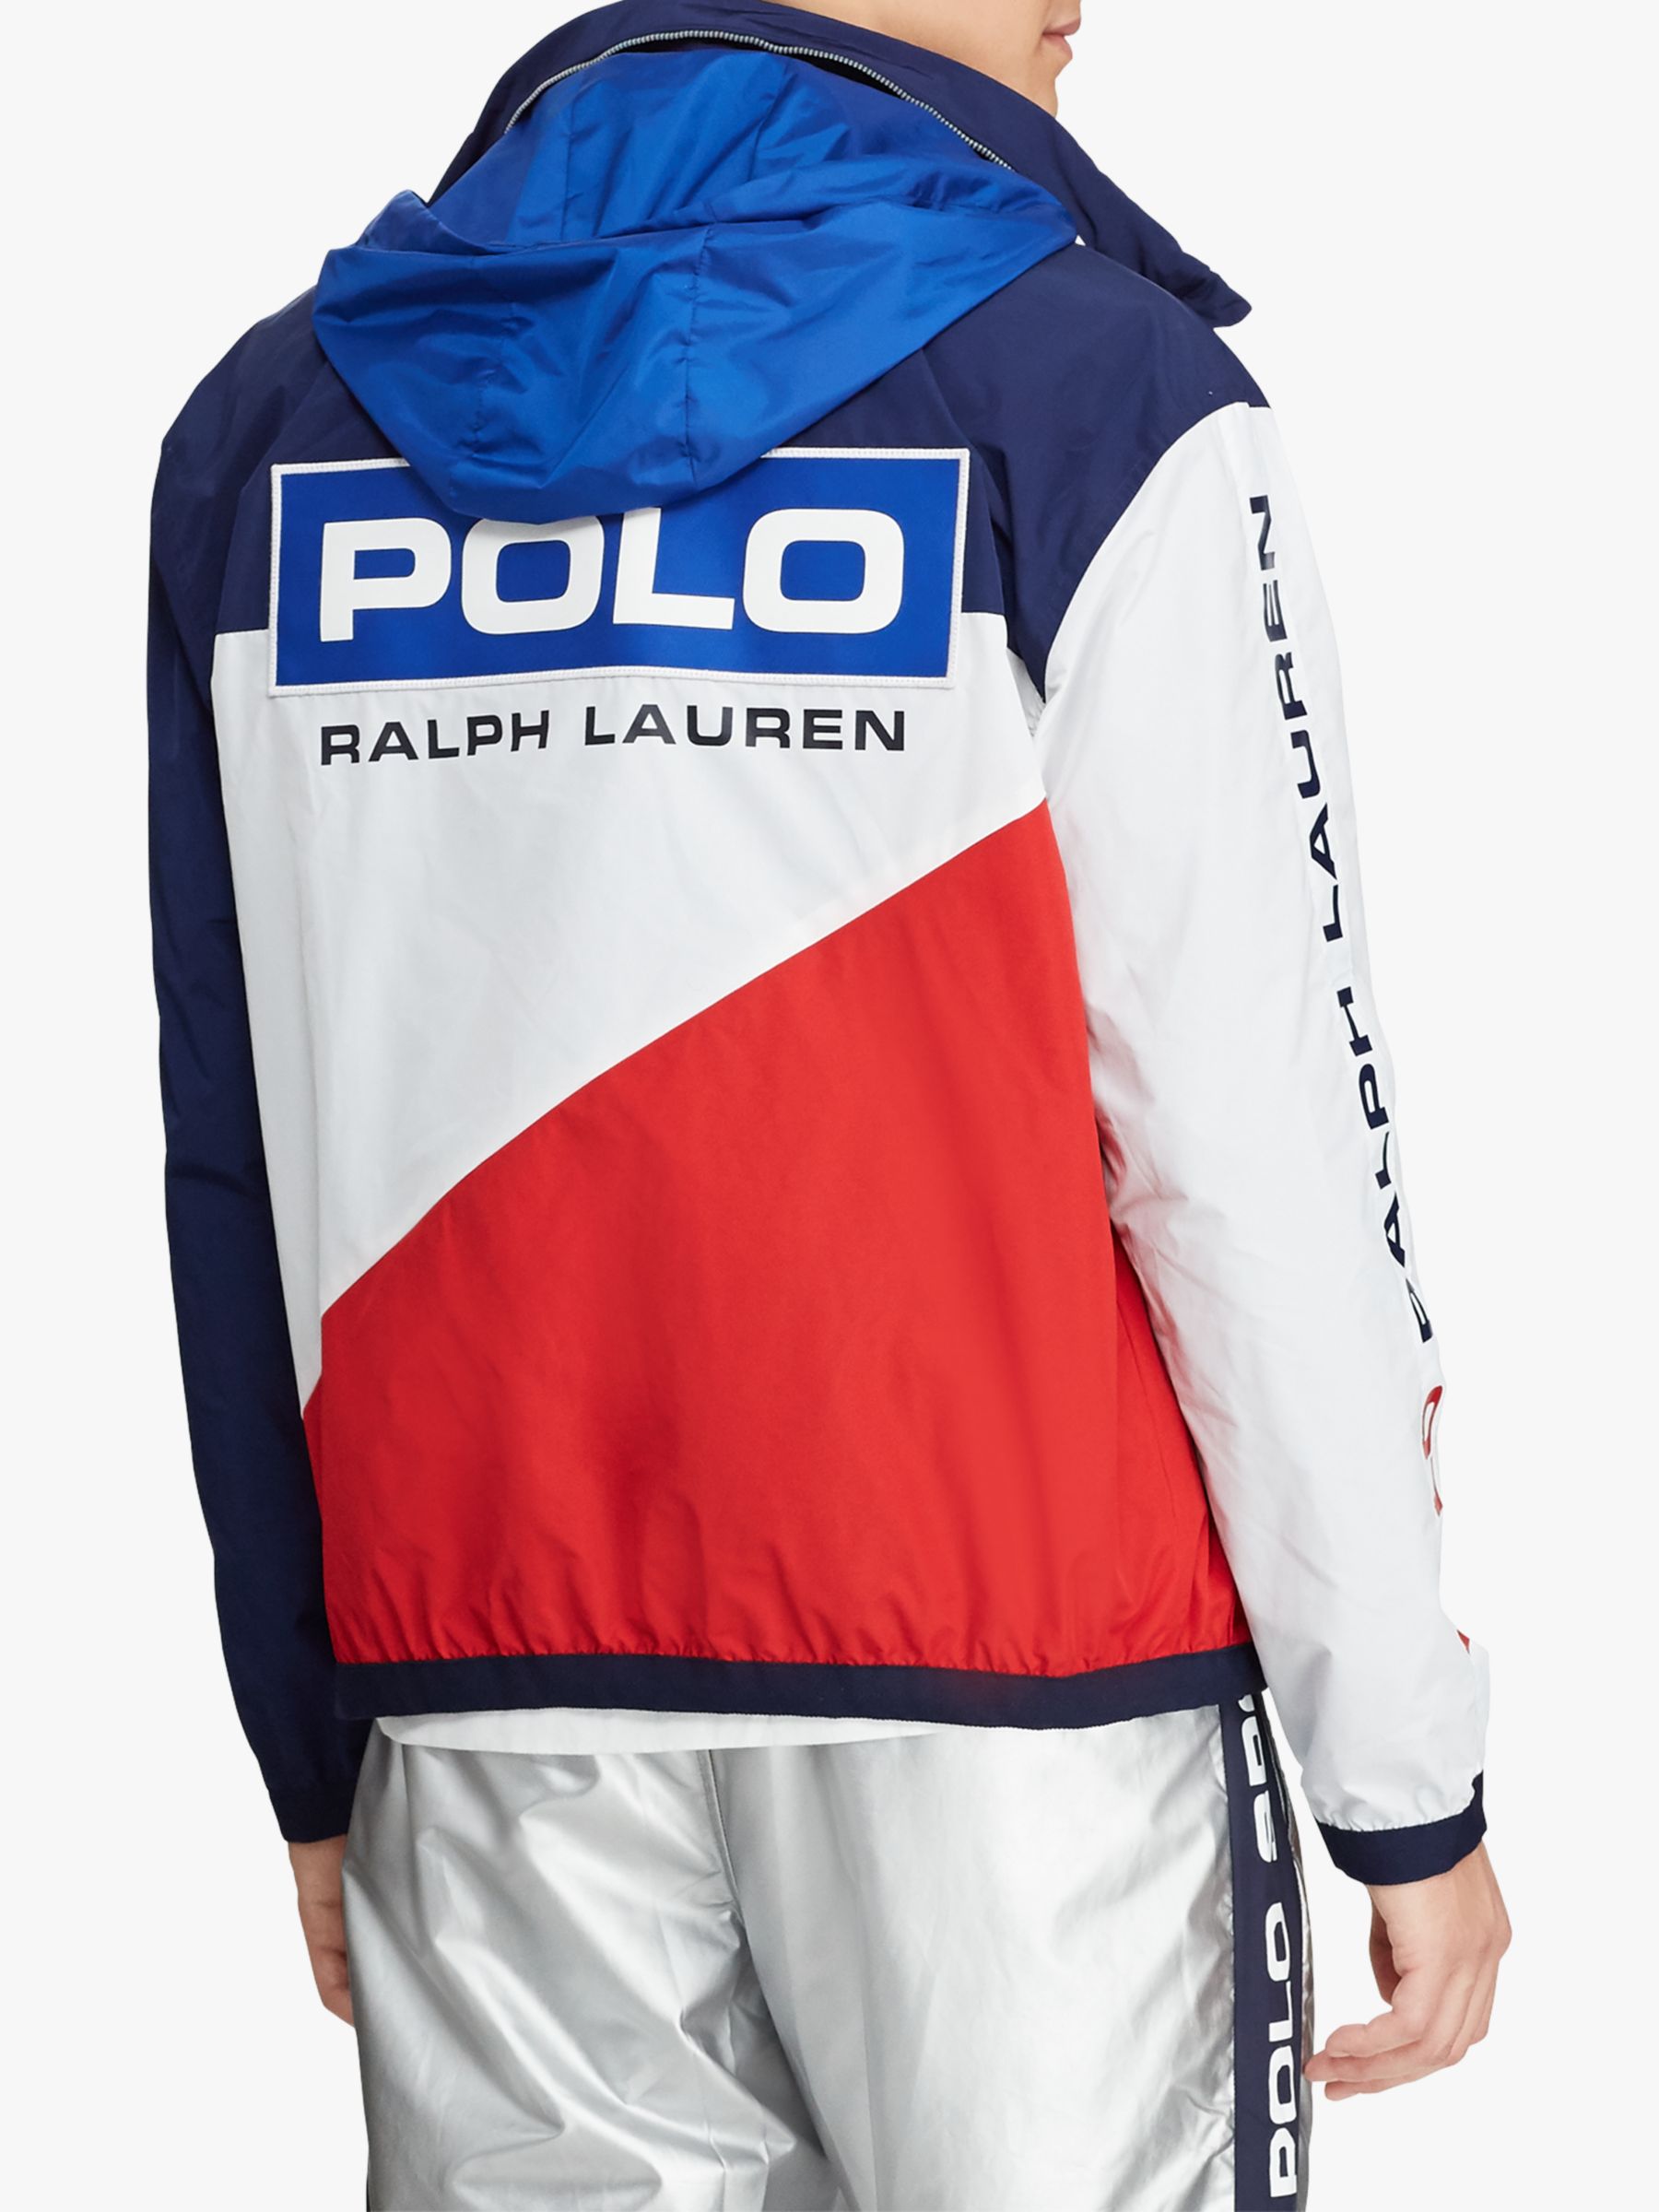 blue and white polo jacket